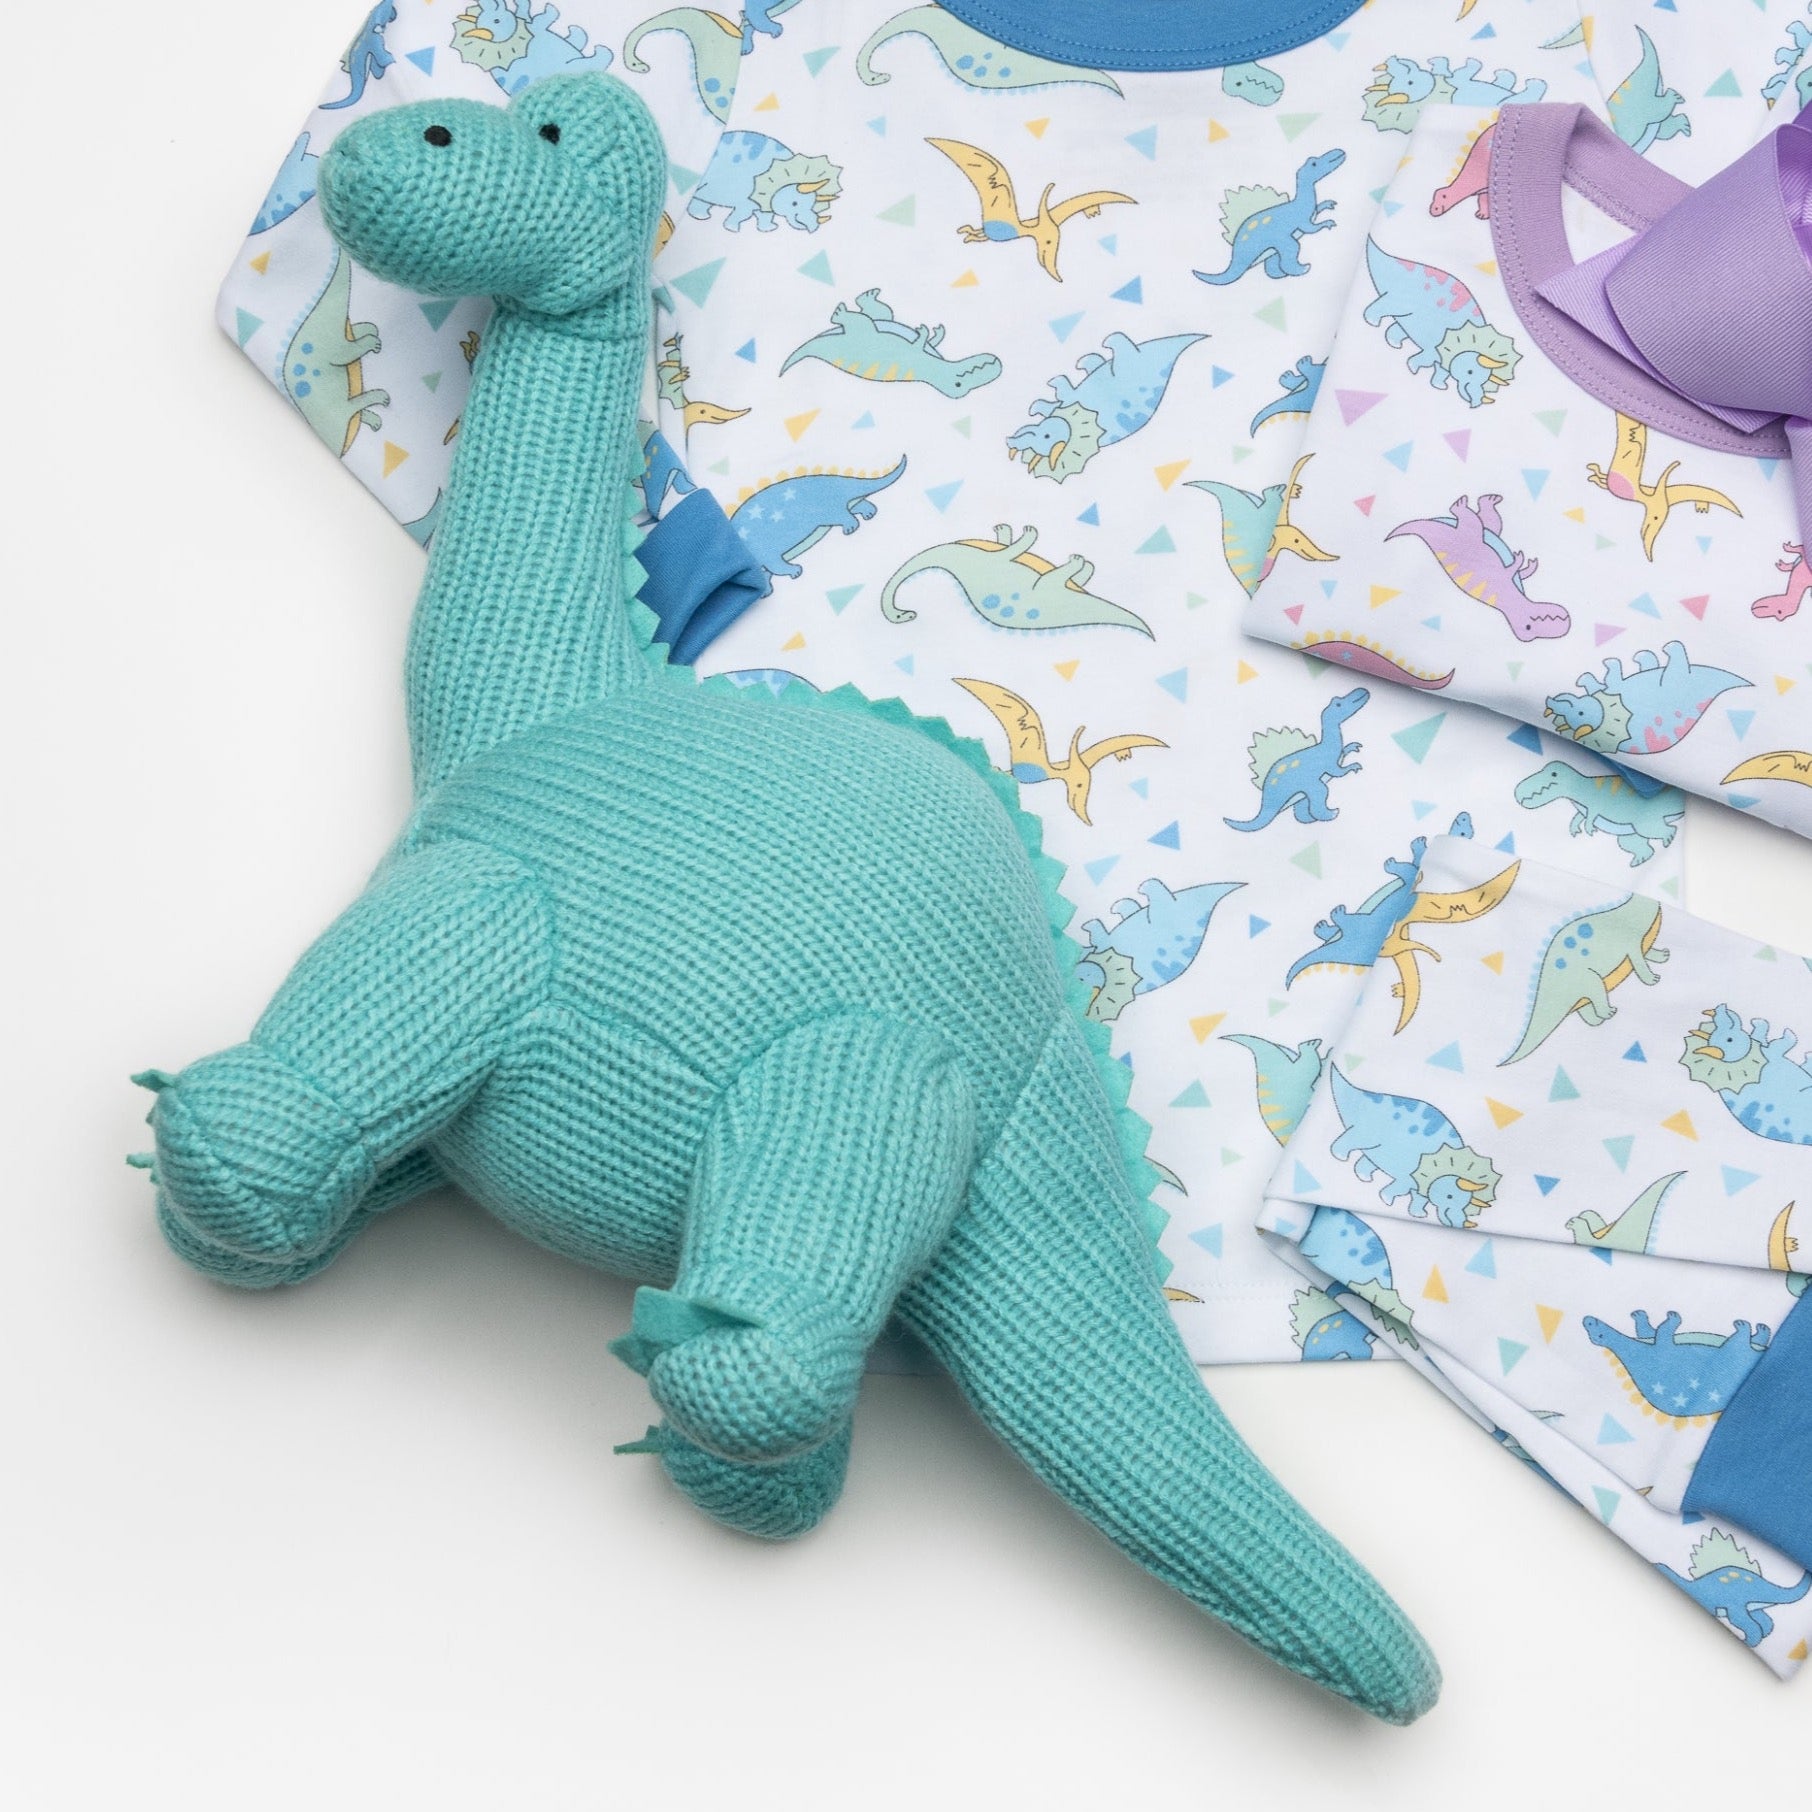 Diplodocus Knitted Dinosaur Soft Toy